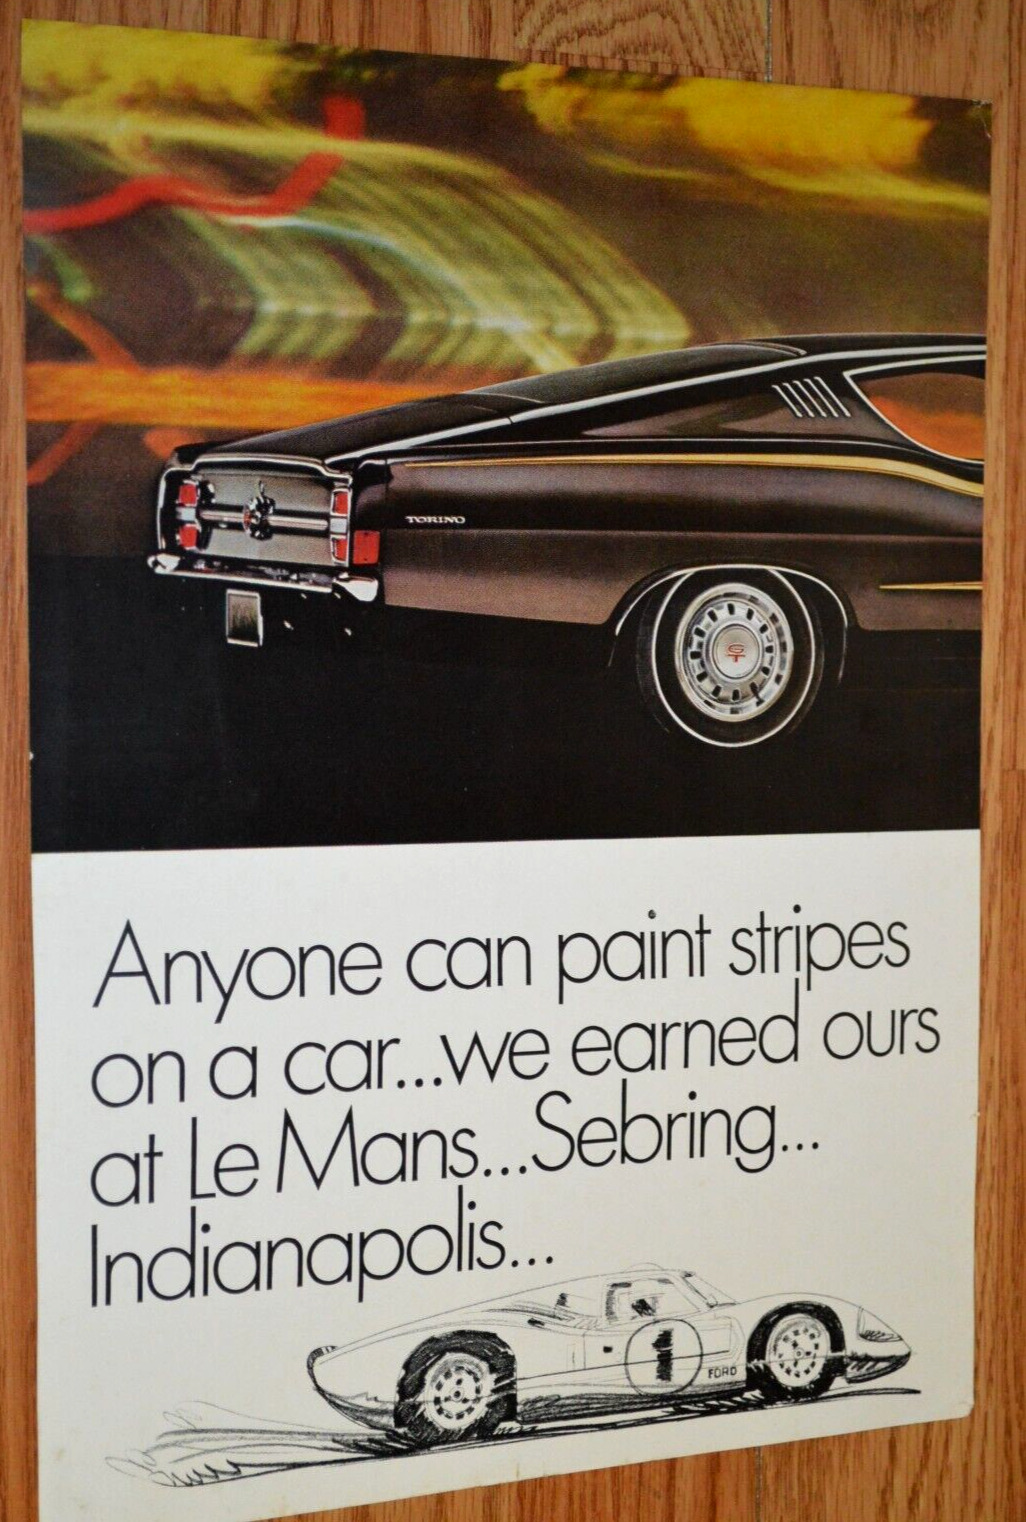 ★1968 FORD TORINO / GT40 ORIGINAL VINTAGE ADVERTISEMENT PRINT AD 68 GT 40